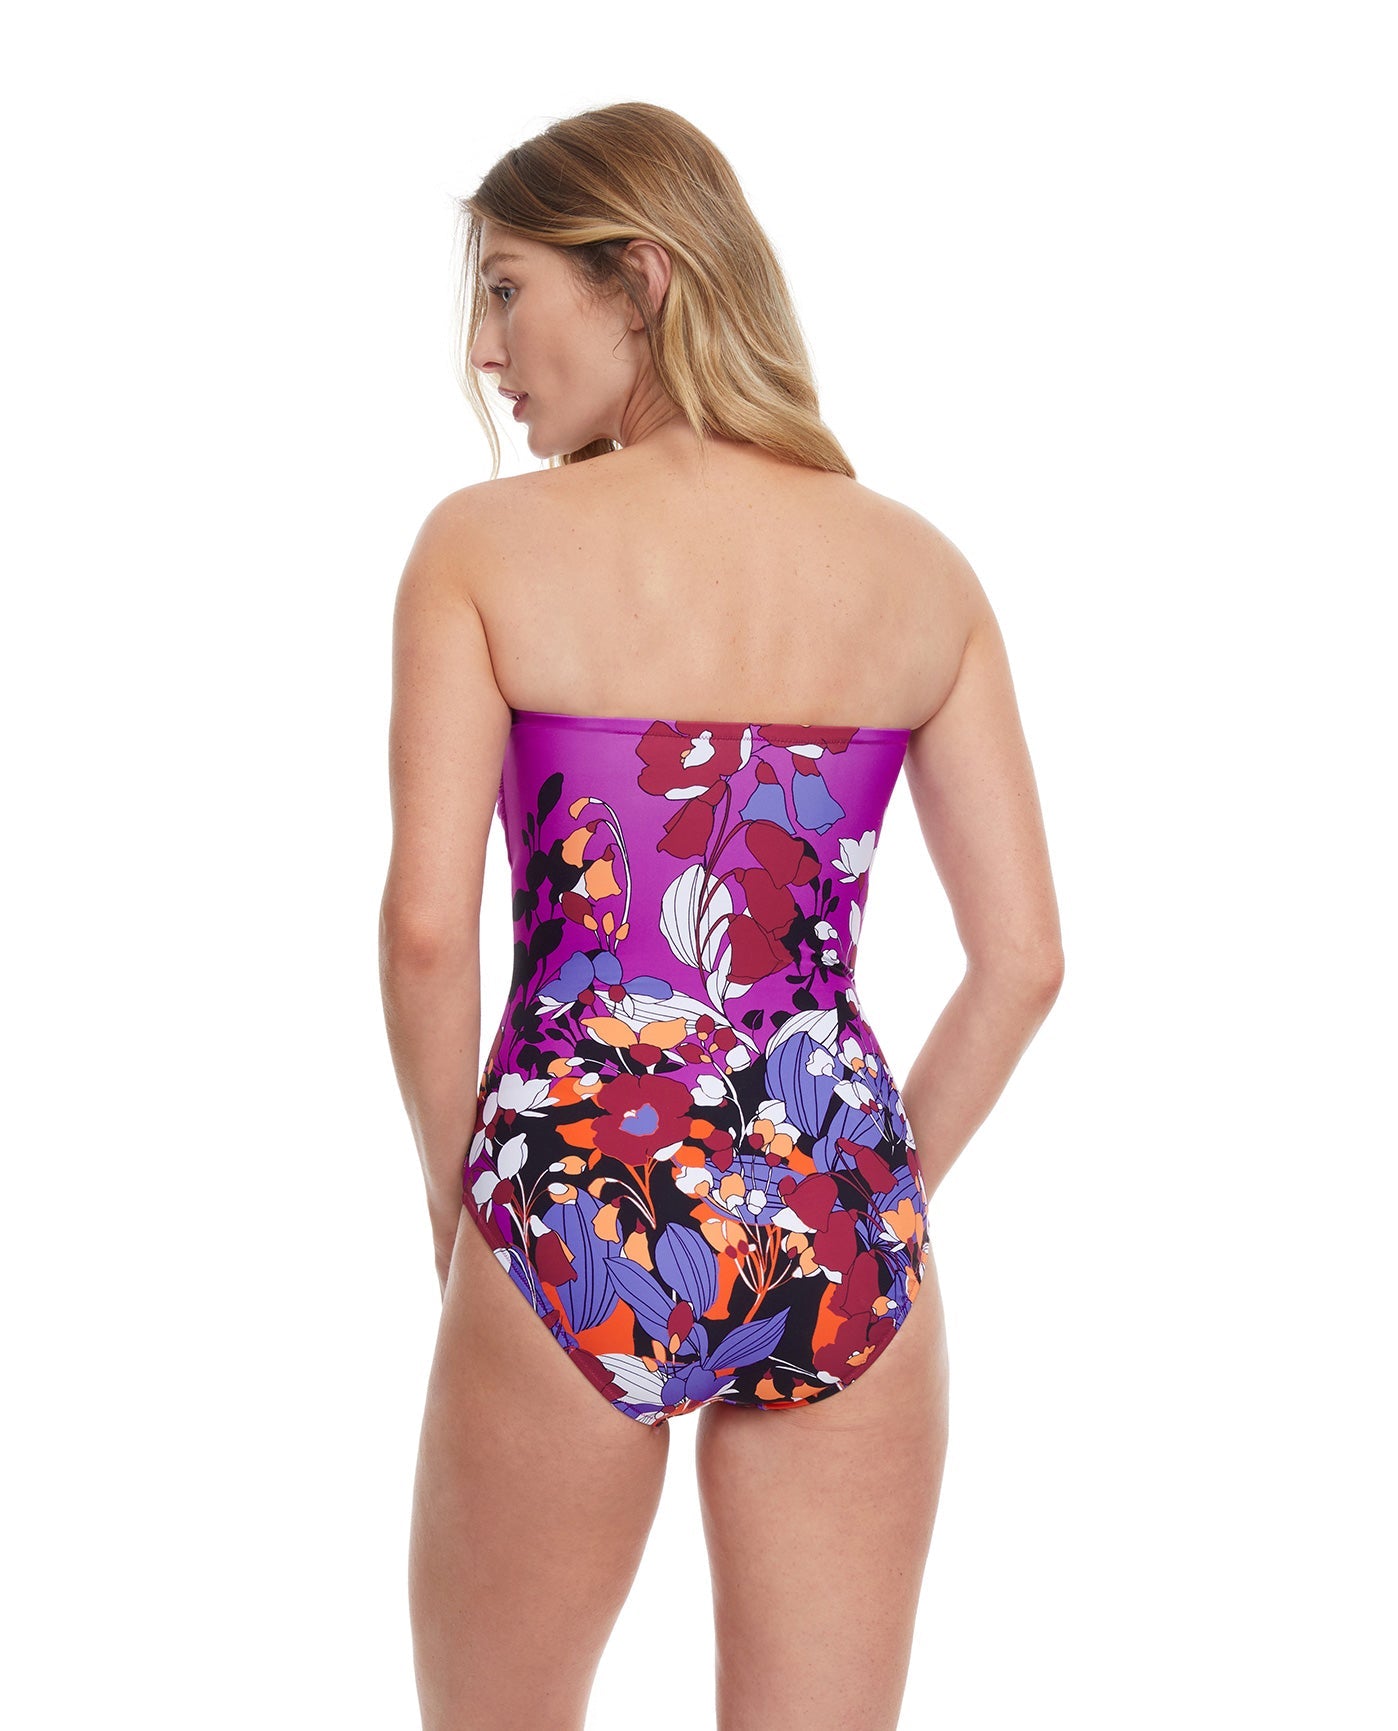 Back View Of Gottex Essentials Floral Art Shaped Bandeau Strapless One Piece Swimsuit | Gottex Floral Art Plum